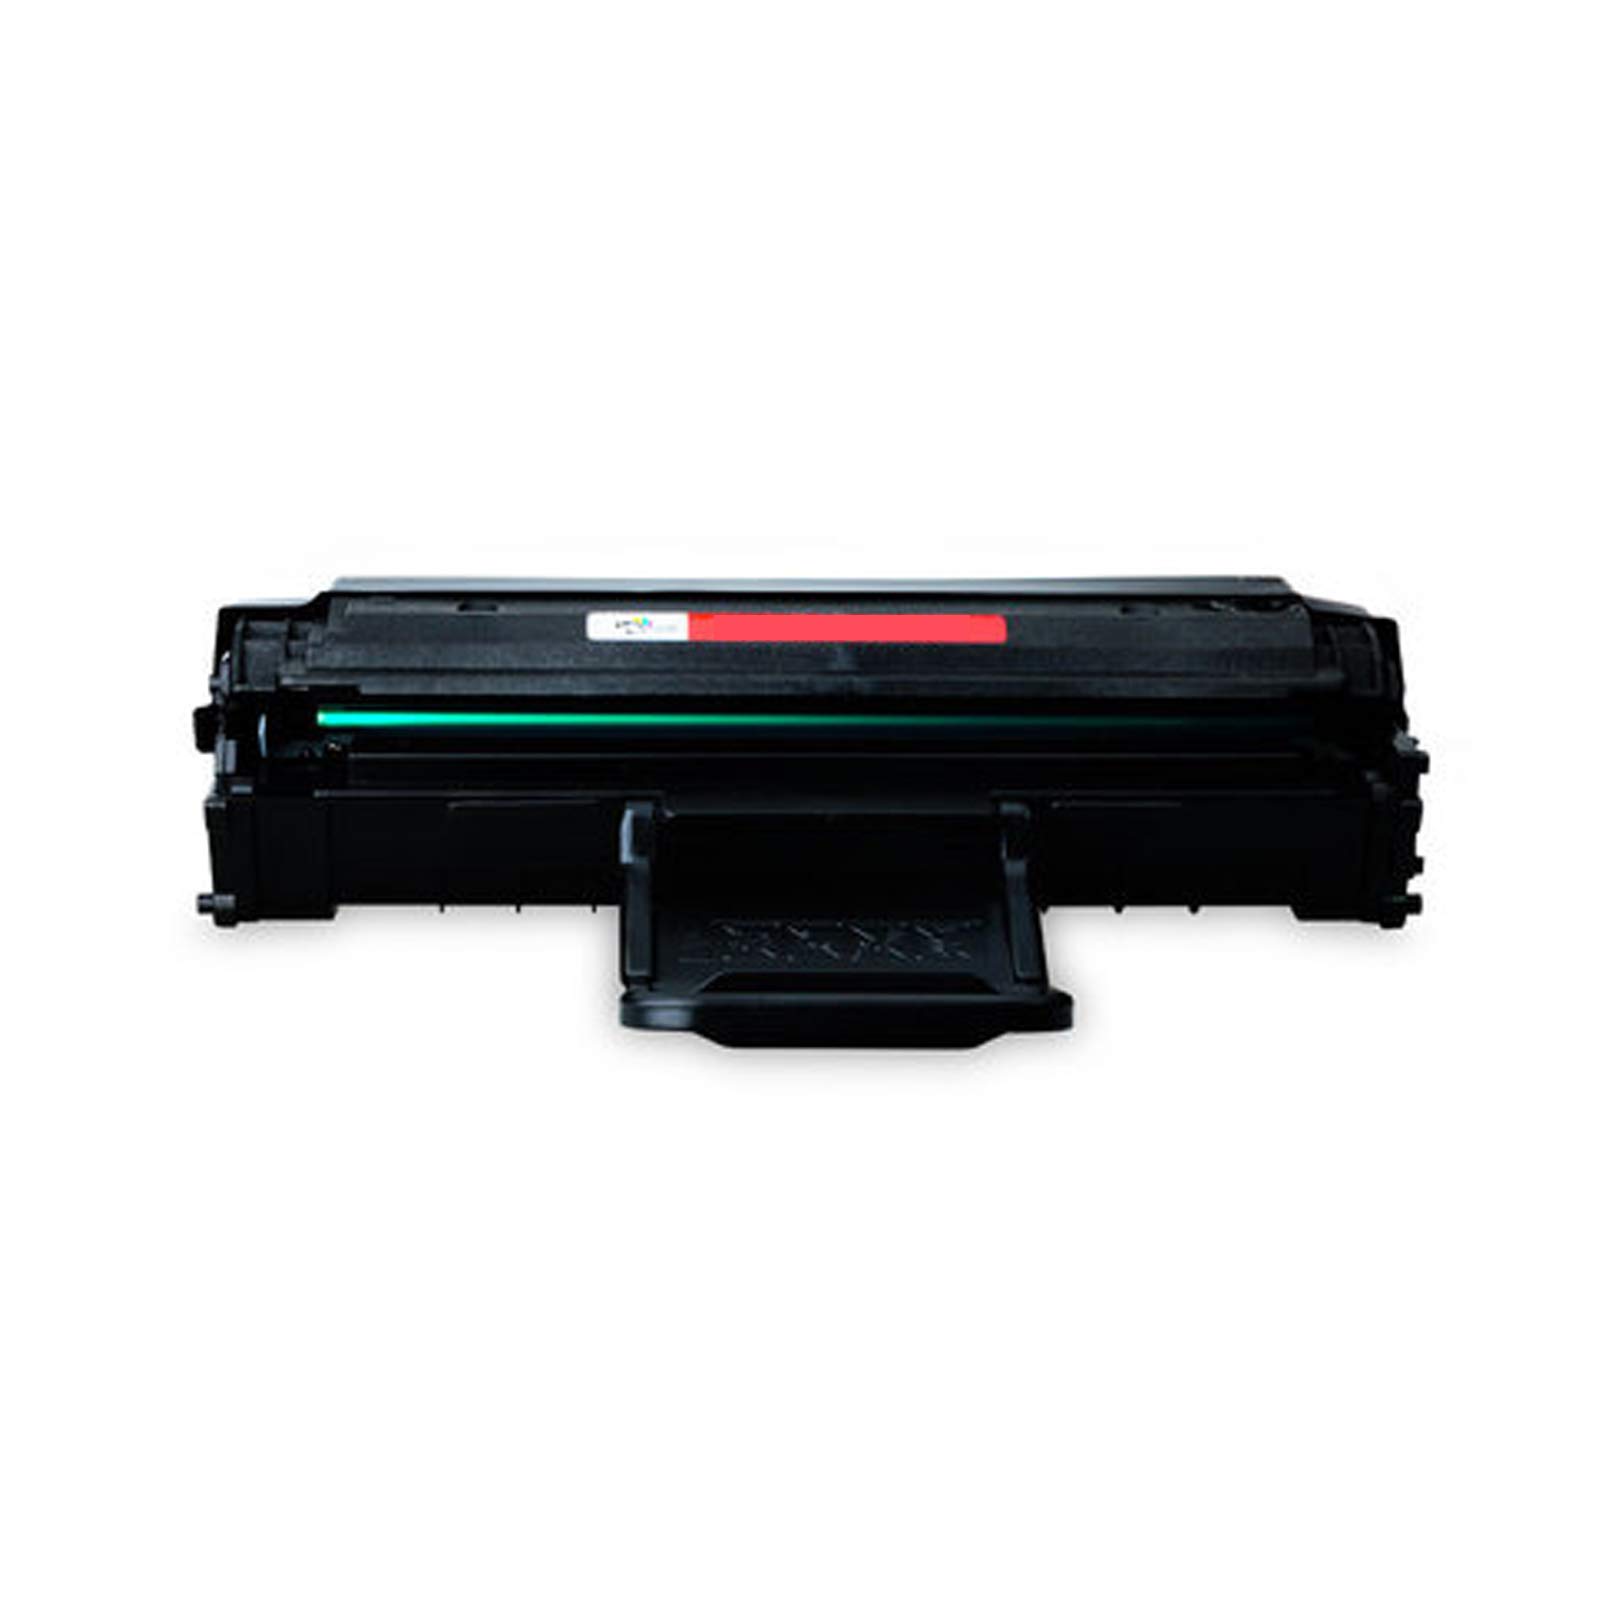 Samsung ML-1645 Laser Printer series